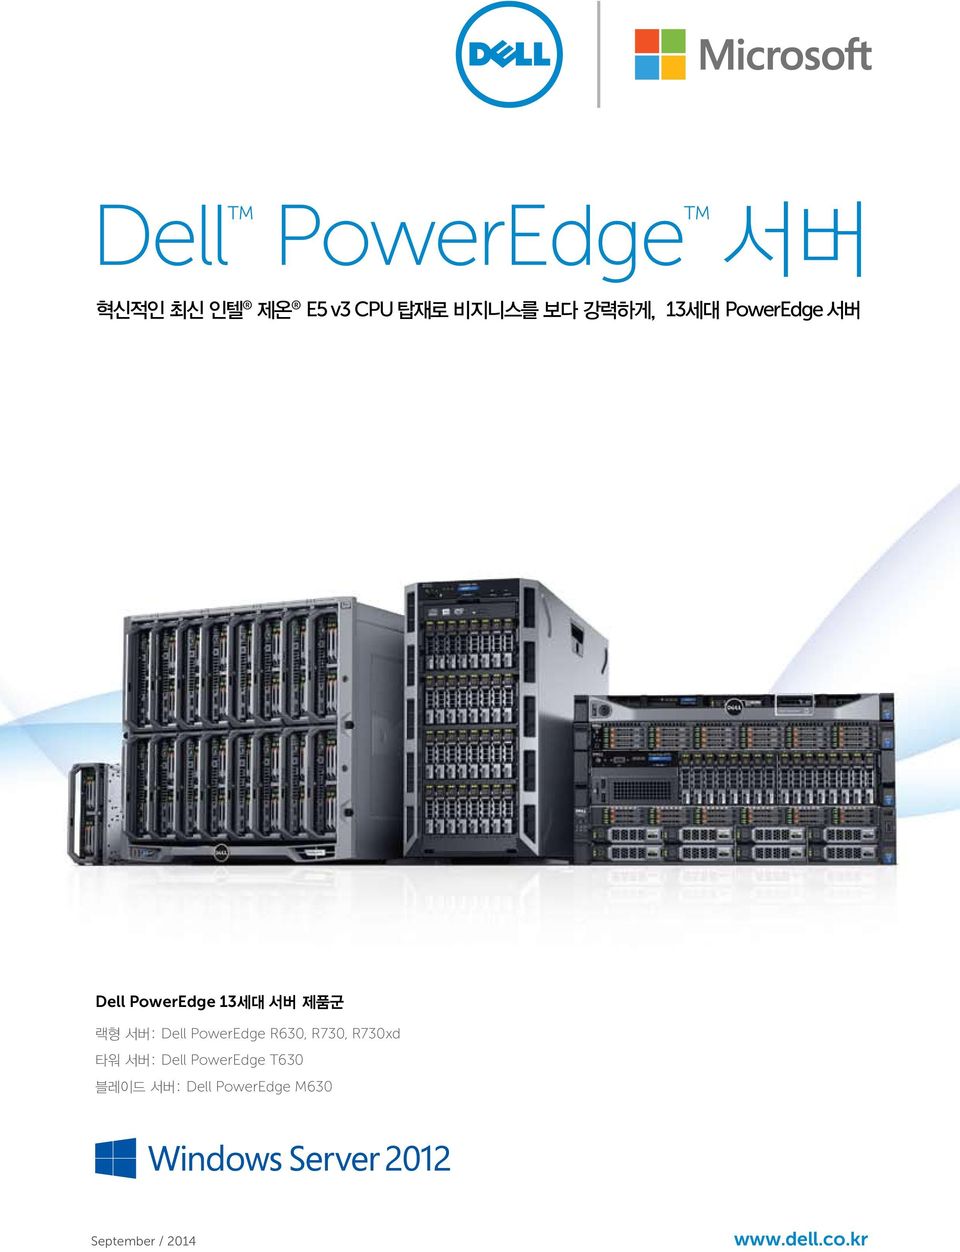 Dell PowerEdge R630, R730, R730xd 타워 서버: Dell PowerEdge